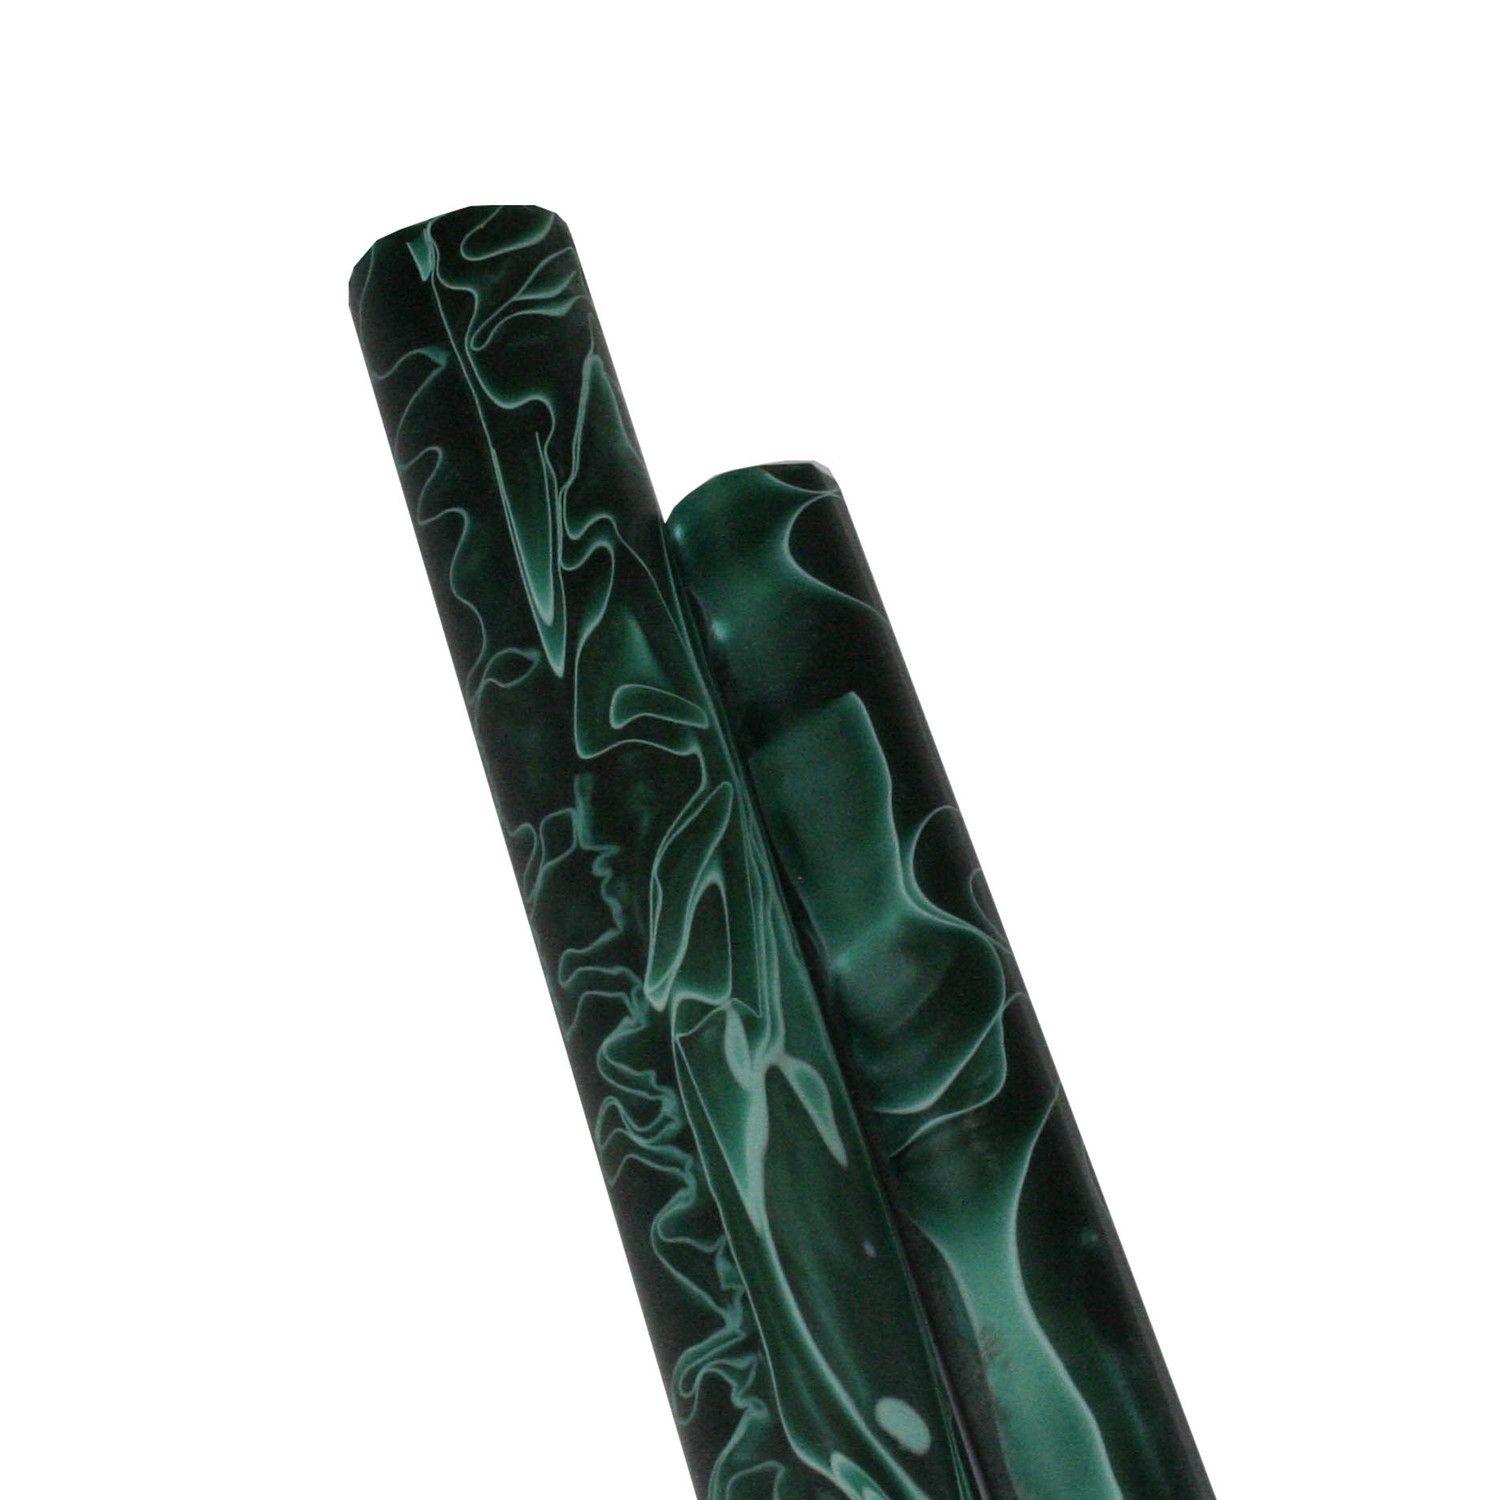 Green and White Swirl Logo - Emerald Green W White Swirl Acrylic Rod Length 28mm 1.10